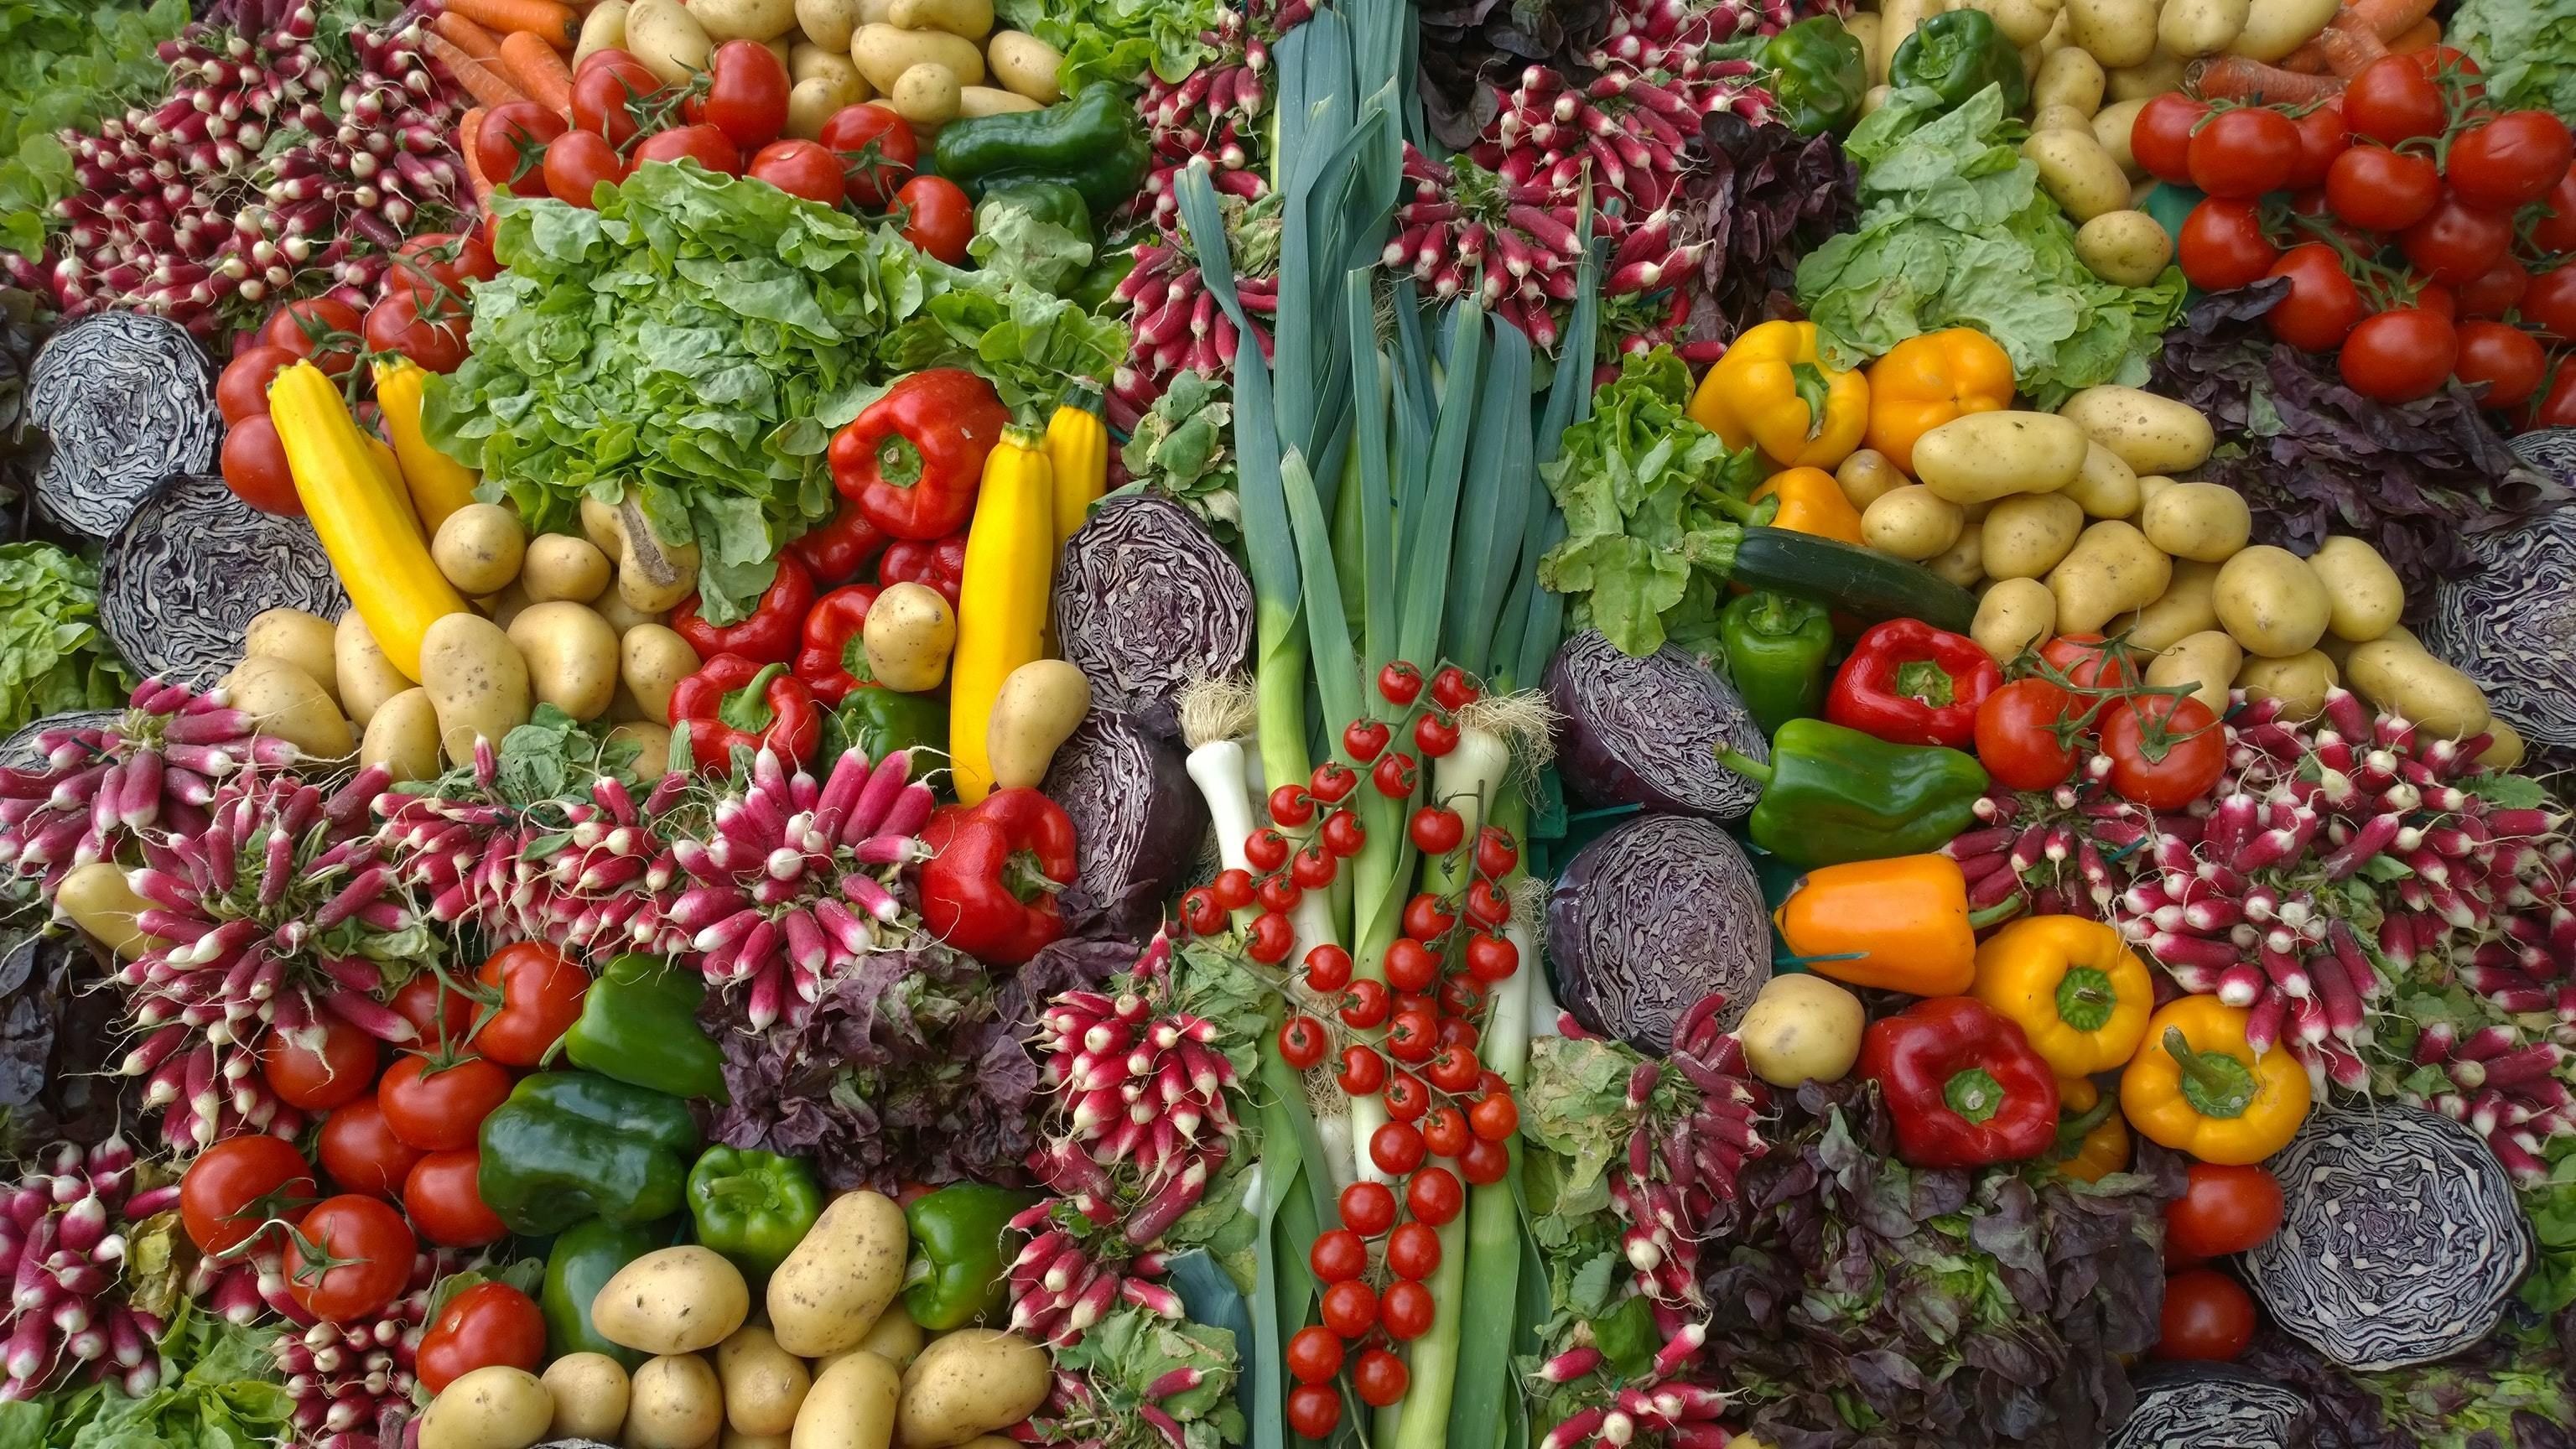 image of mixed produce